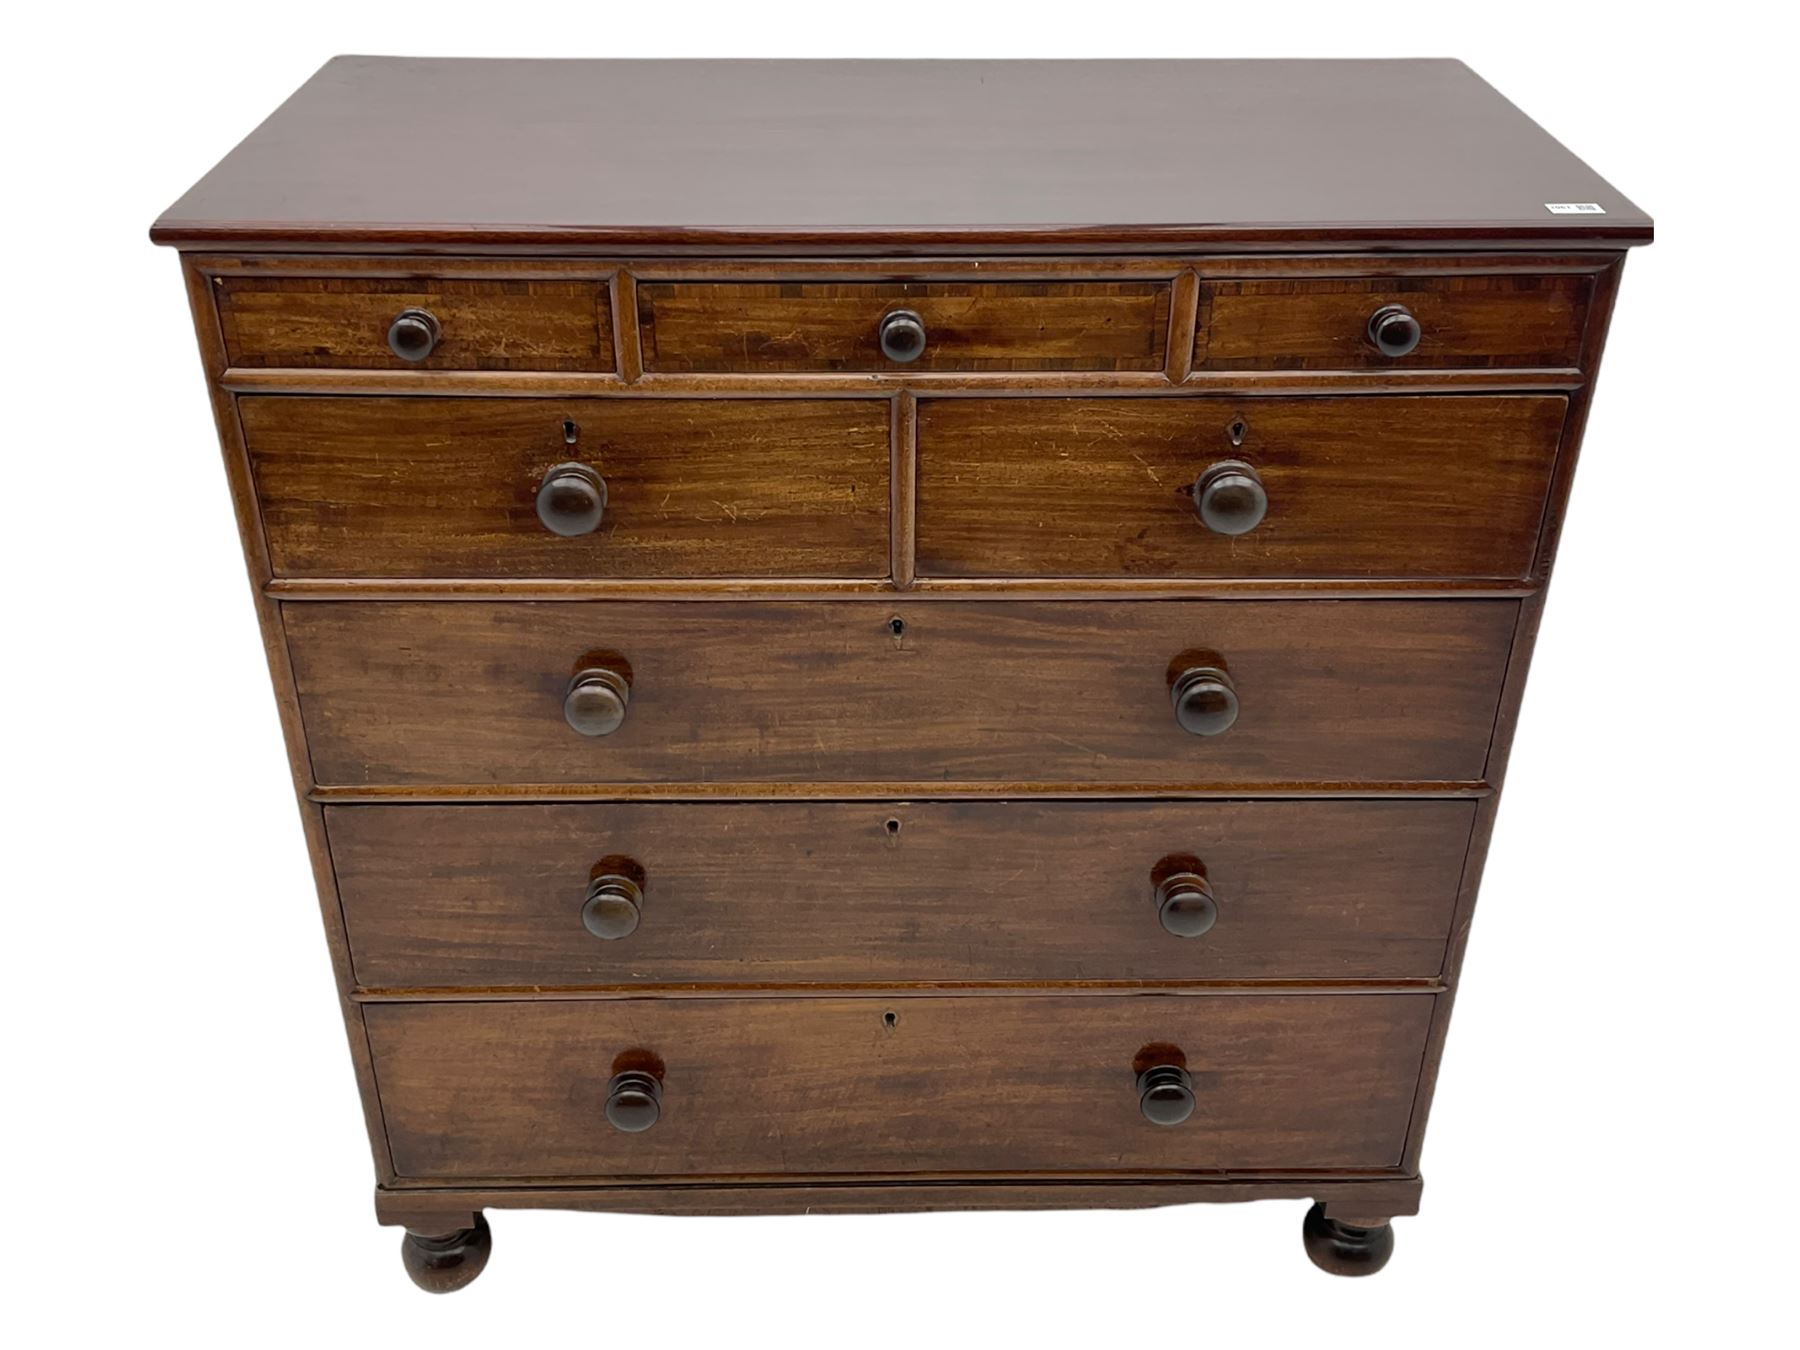 19th century mahogany chest - Image 5 of 14